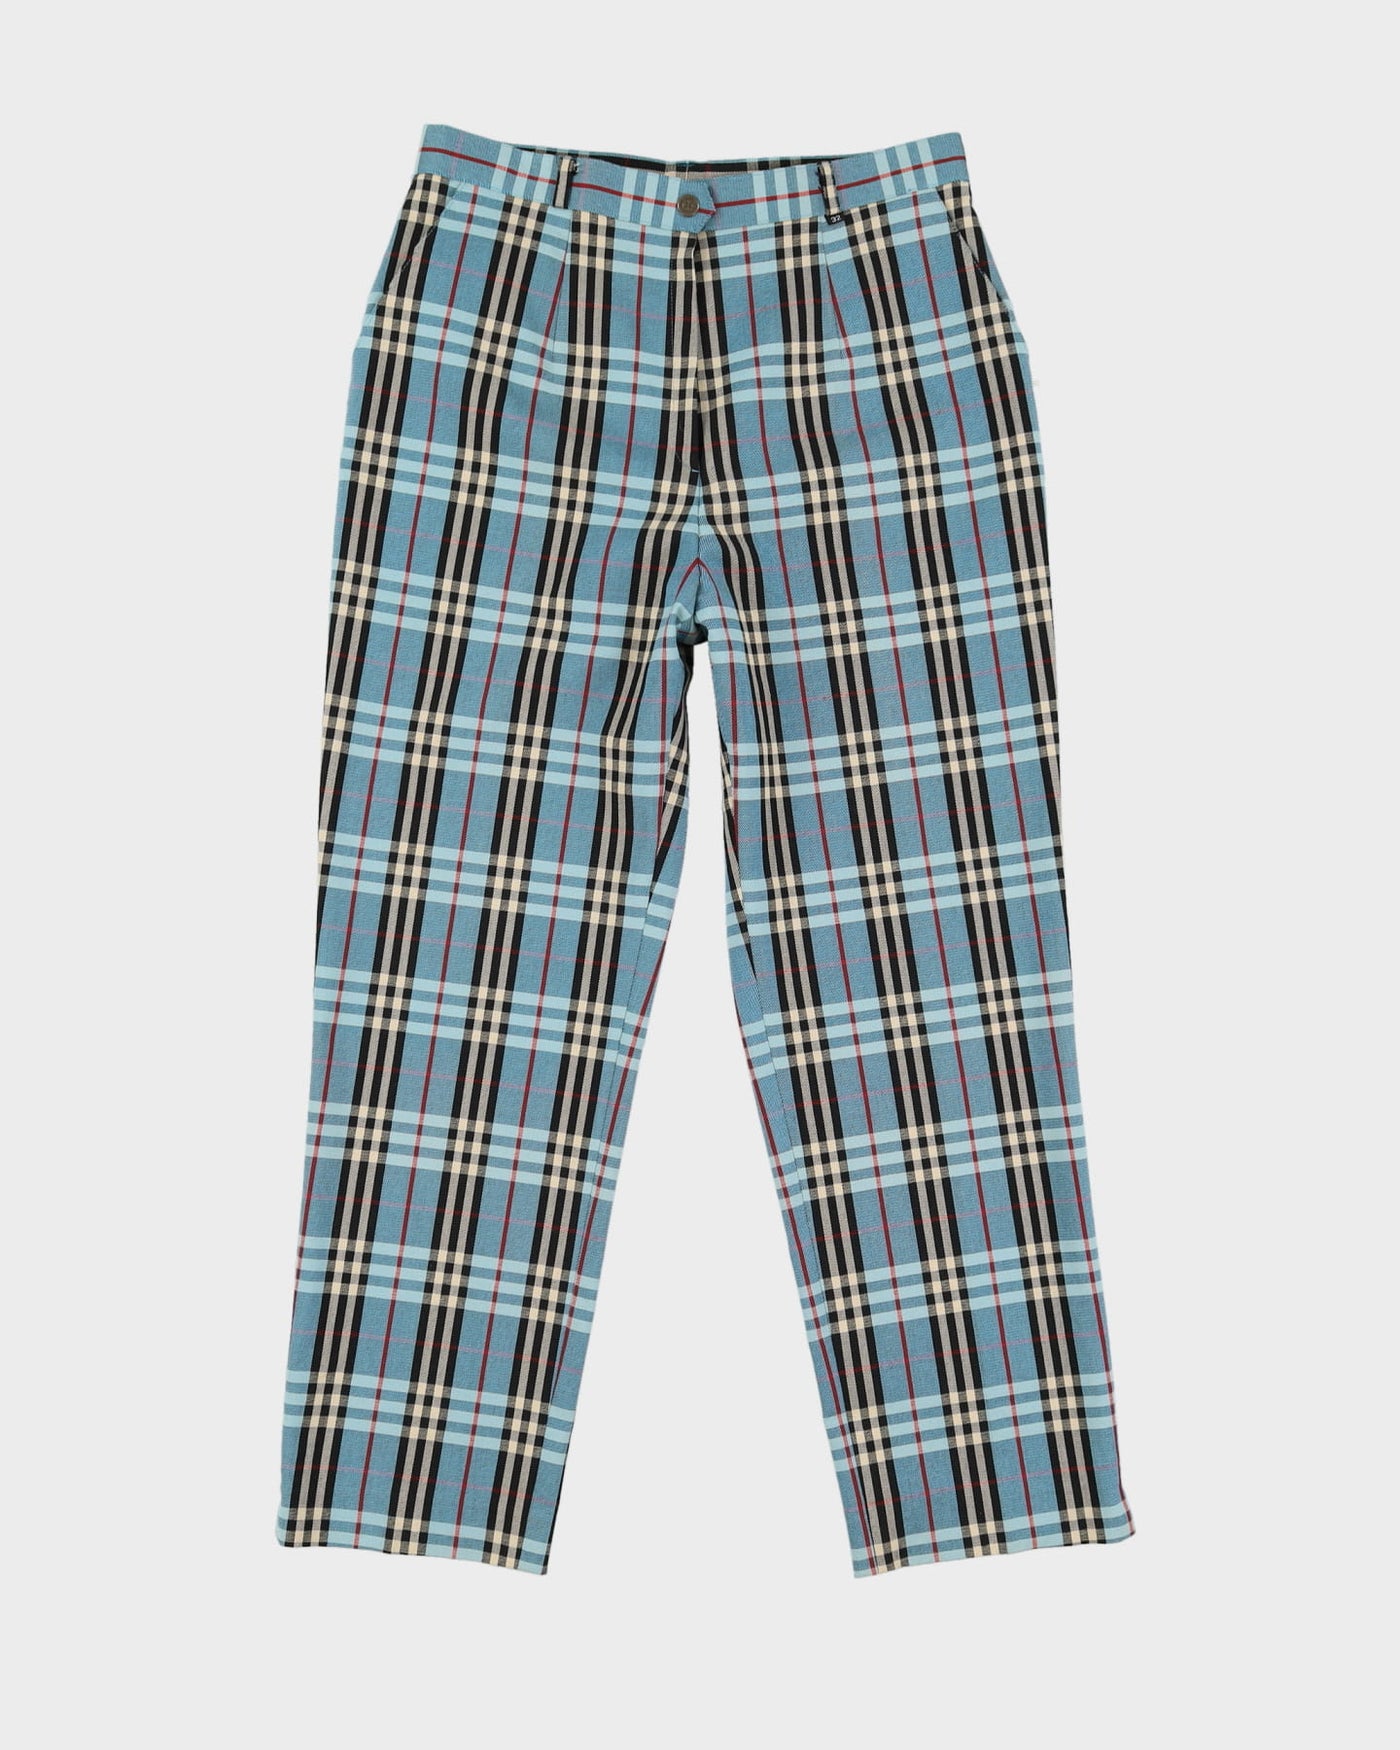 Vintage Blue Check Patterned Trousers - W31 L26